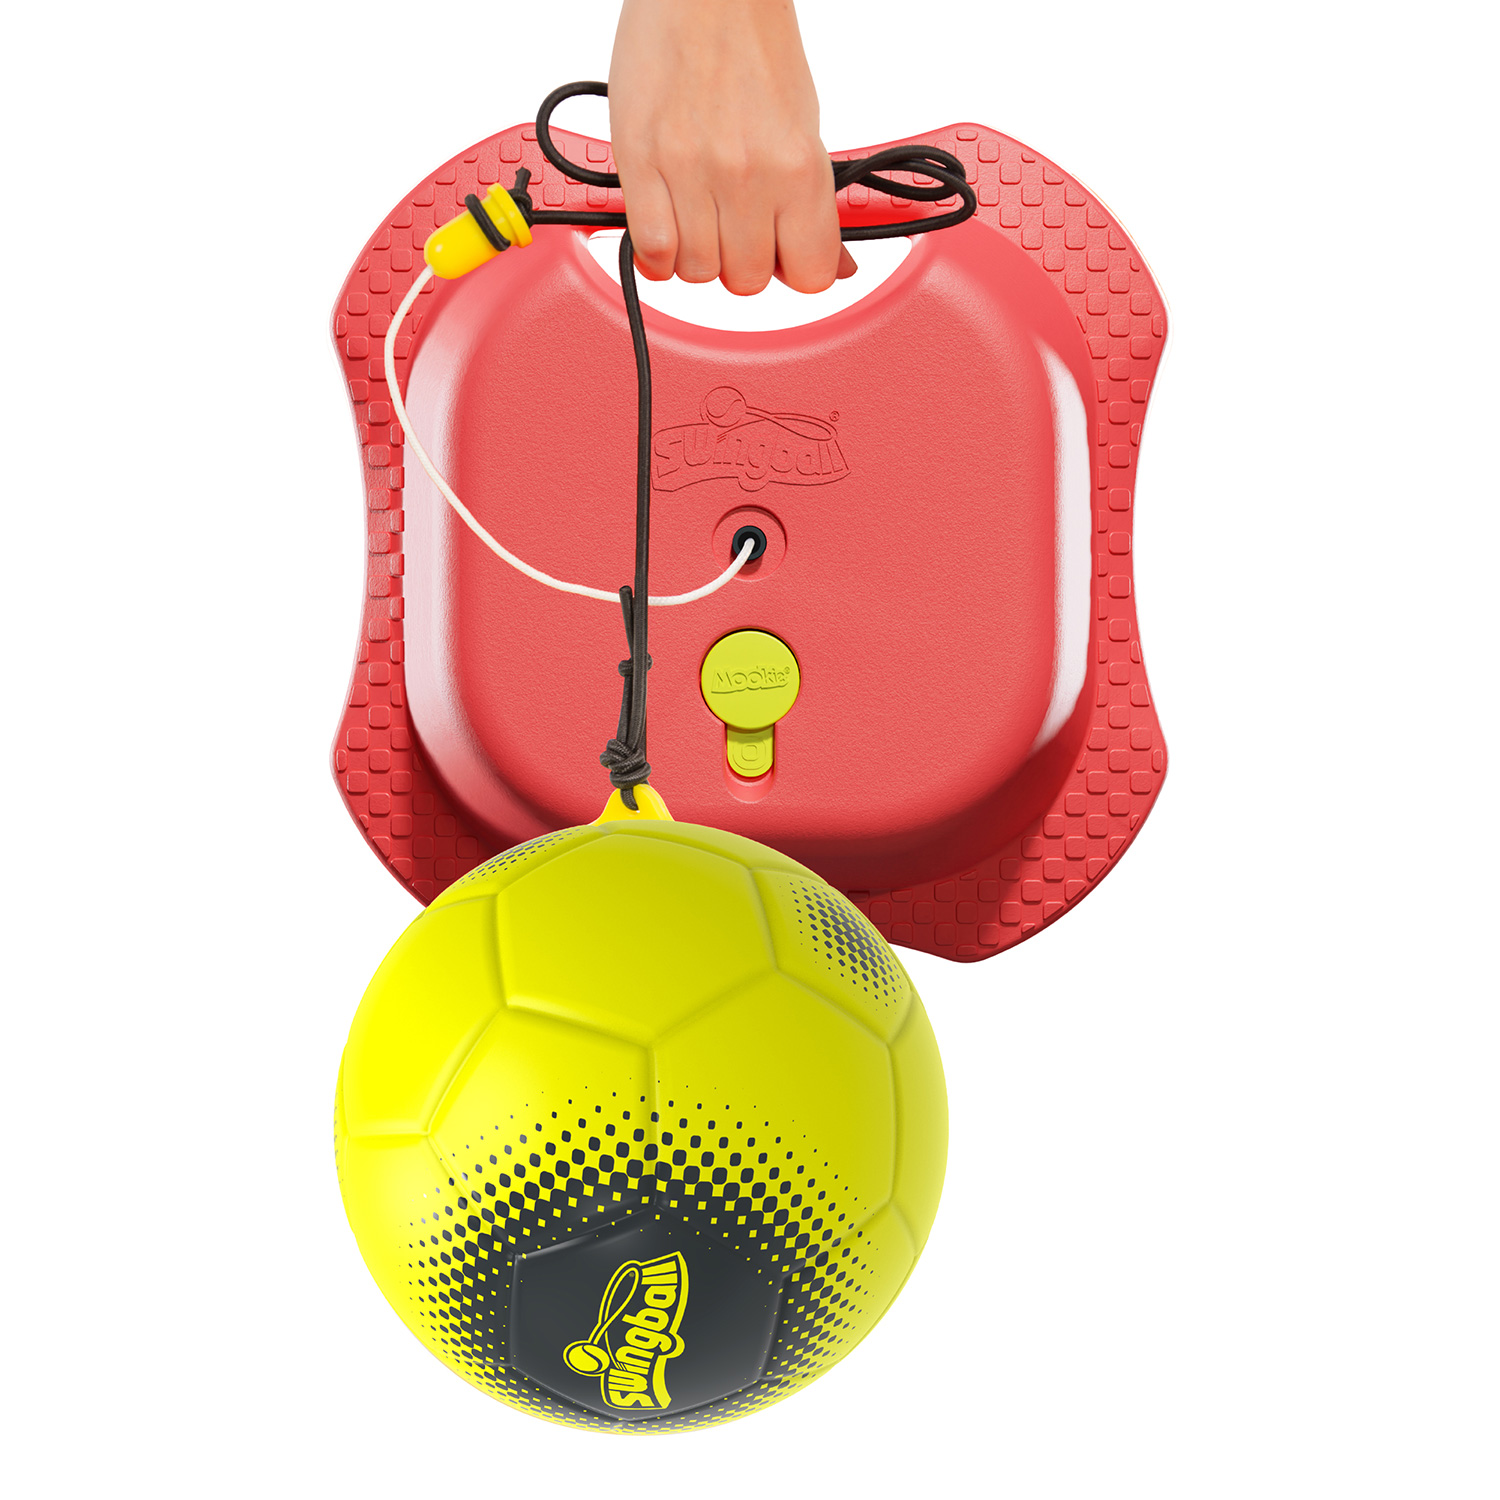 Swingball Reflex Fußballspiel